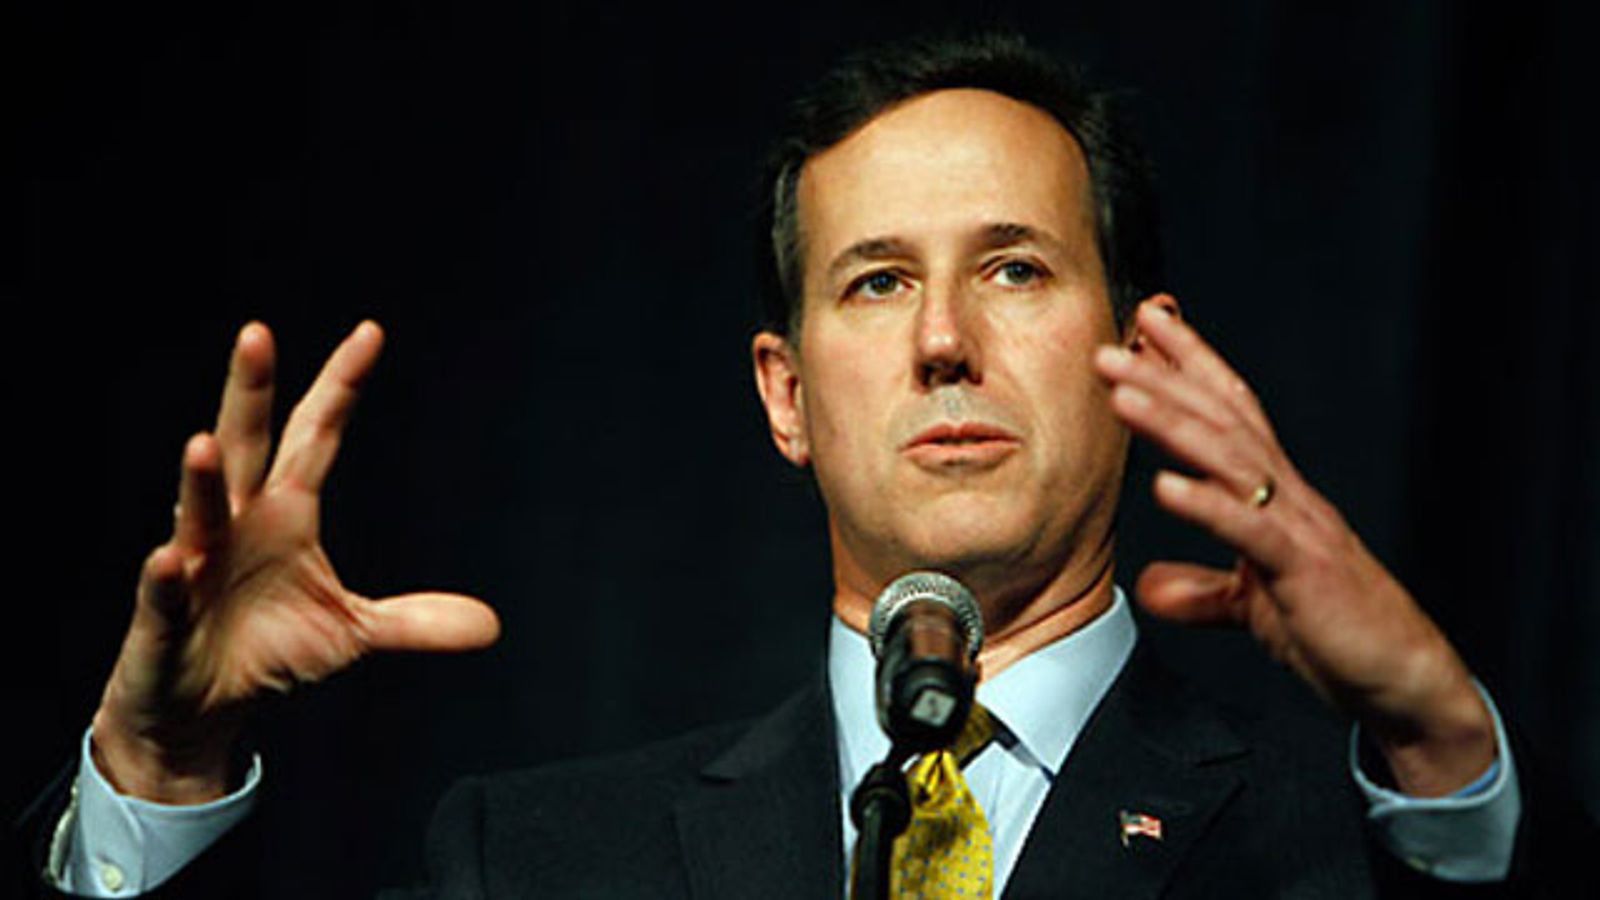 Rick Santorum Embodies the Politics of Moral Aggravation